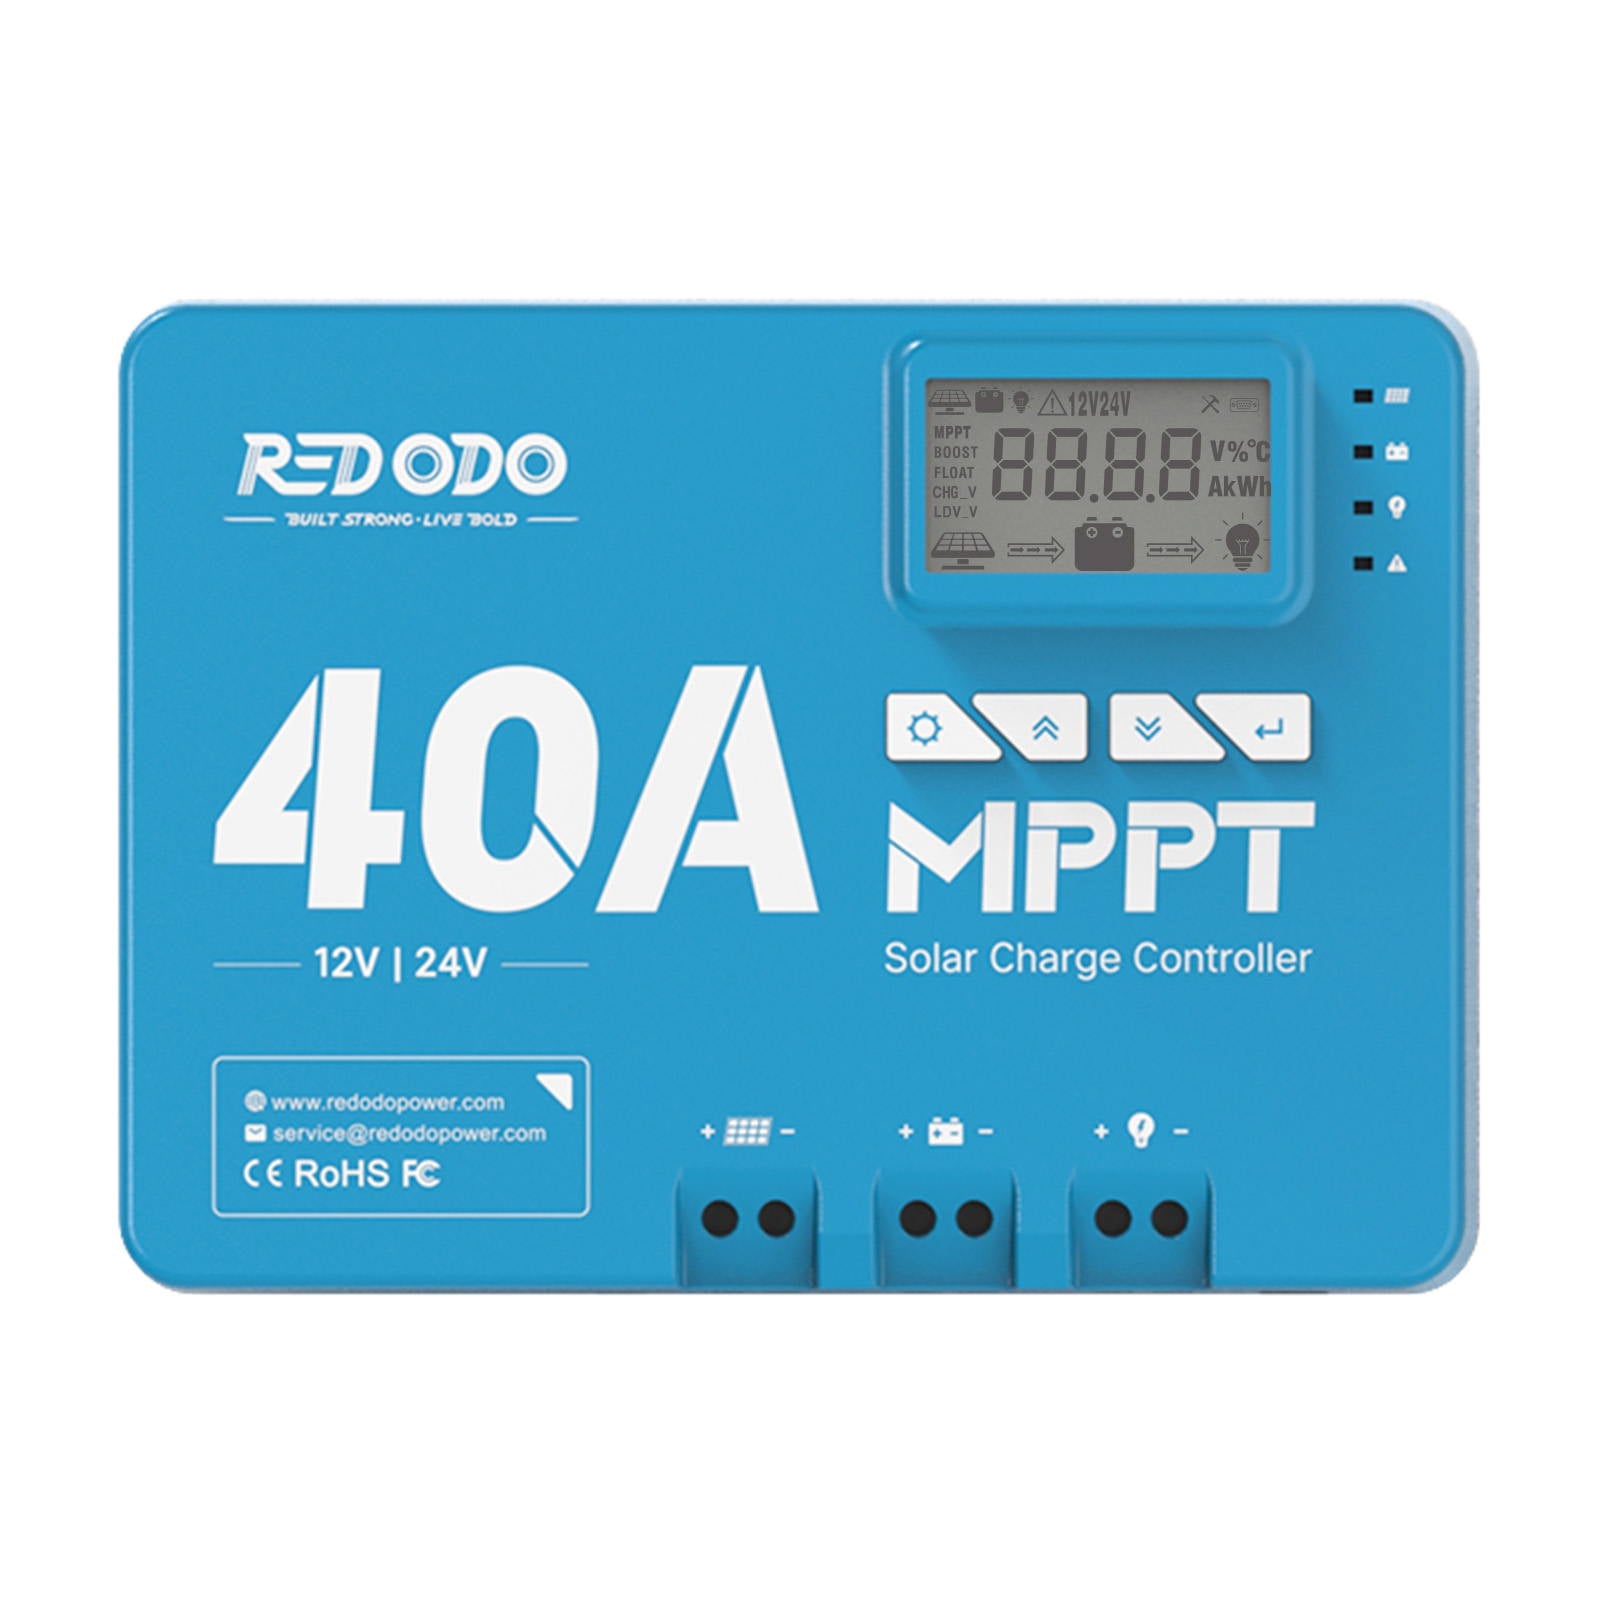 Redodo 40A MPPT 12V/24V Auto DC Input Solarladeregler Mit Bluetooth Adapter redodopower-de